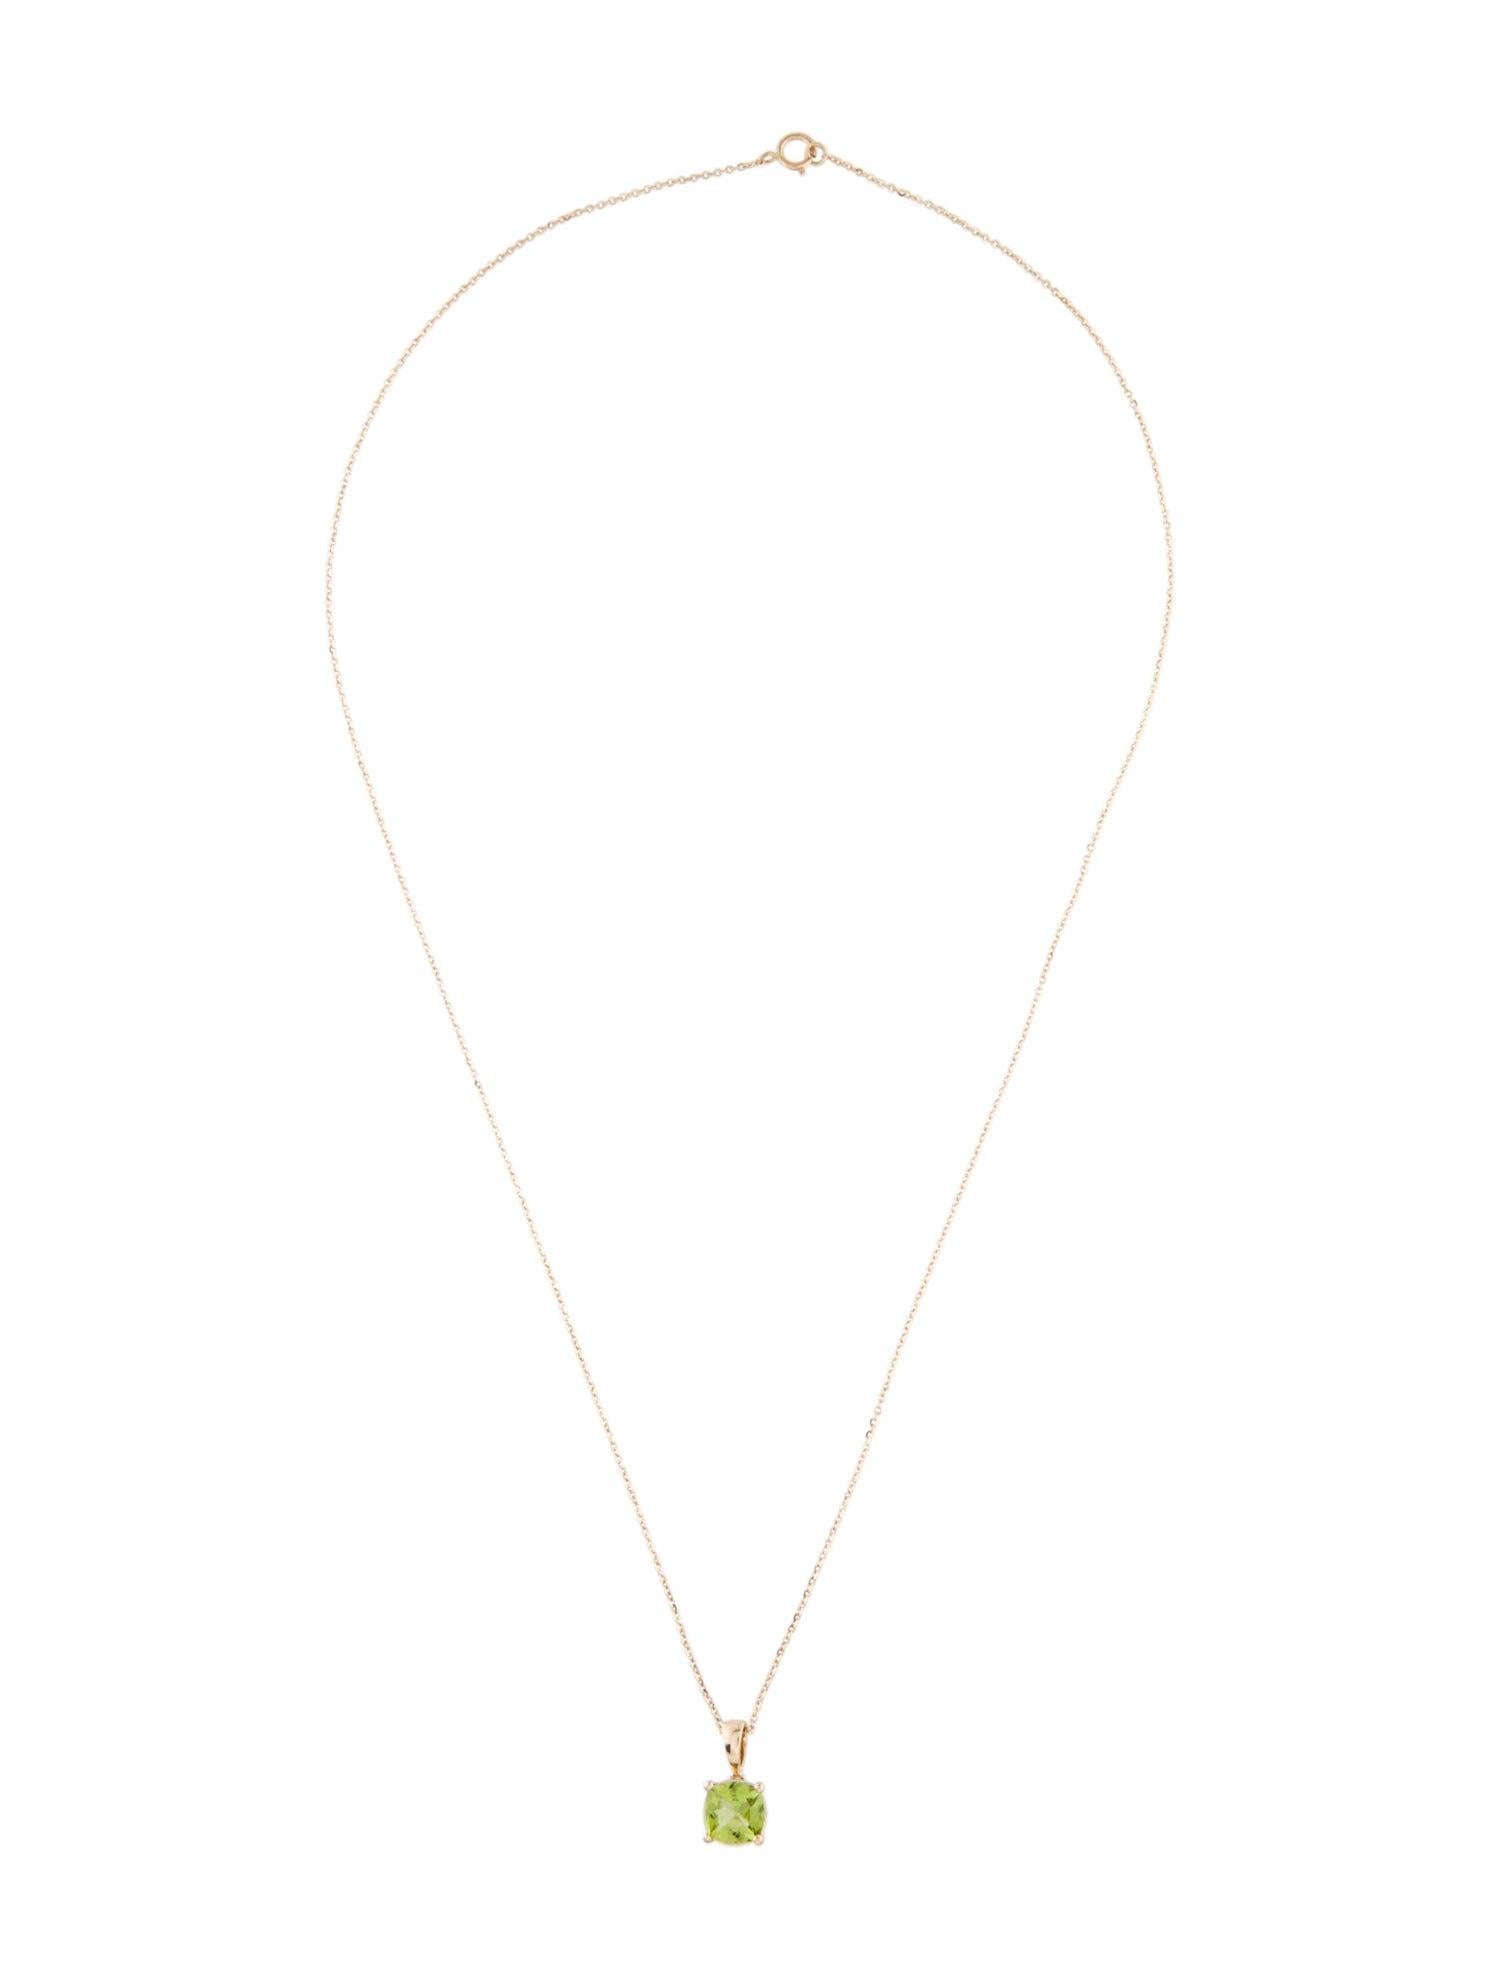 Cushion Cut Luxury 14K Peridot Pendant Necklace  1.23ct Gemstone  Elegant Jewelry For Sale